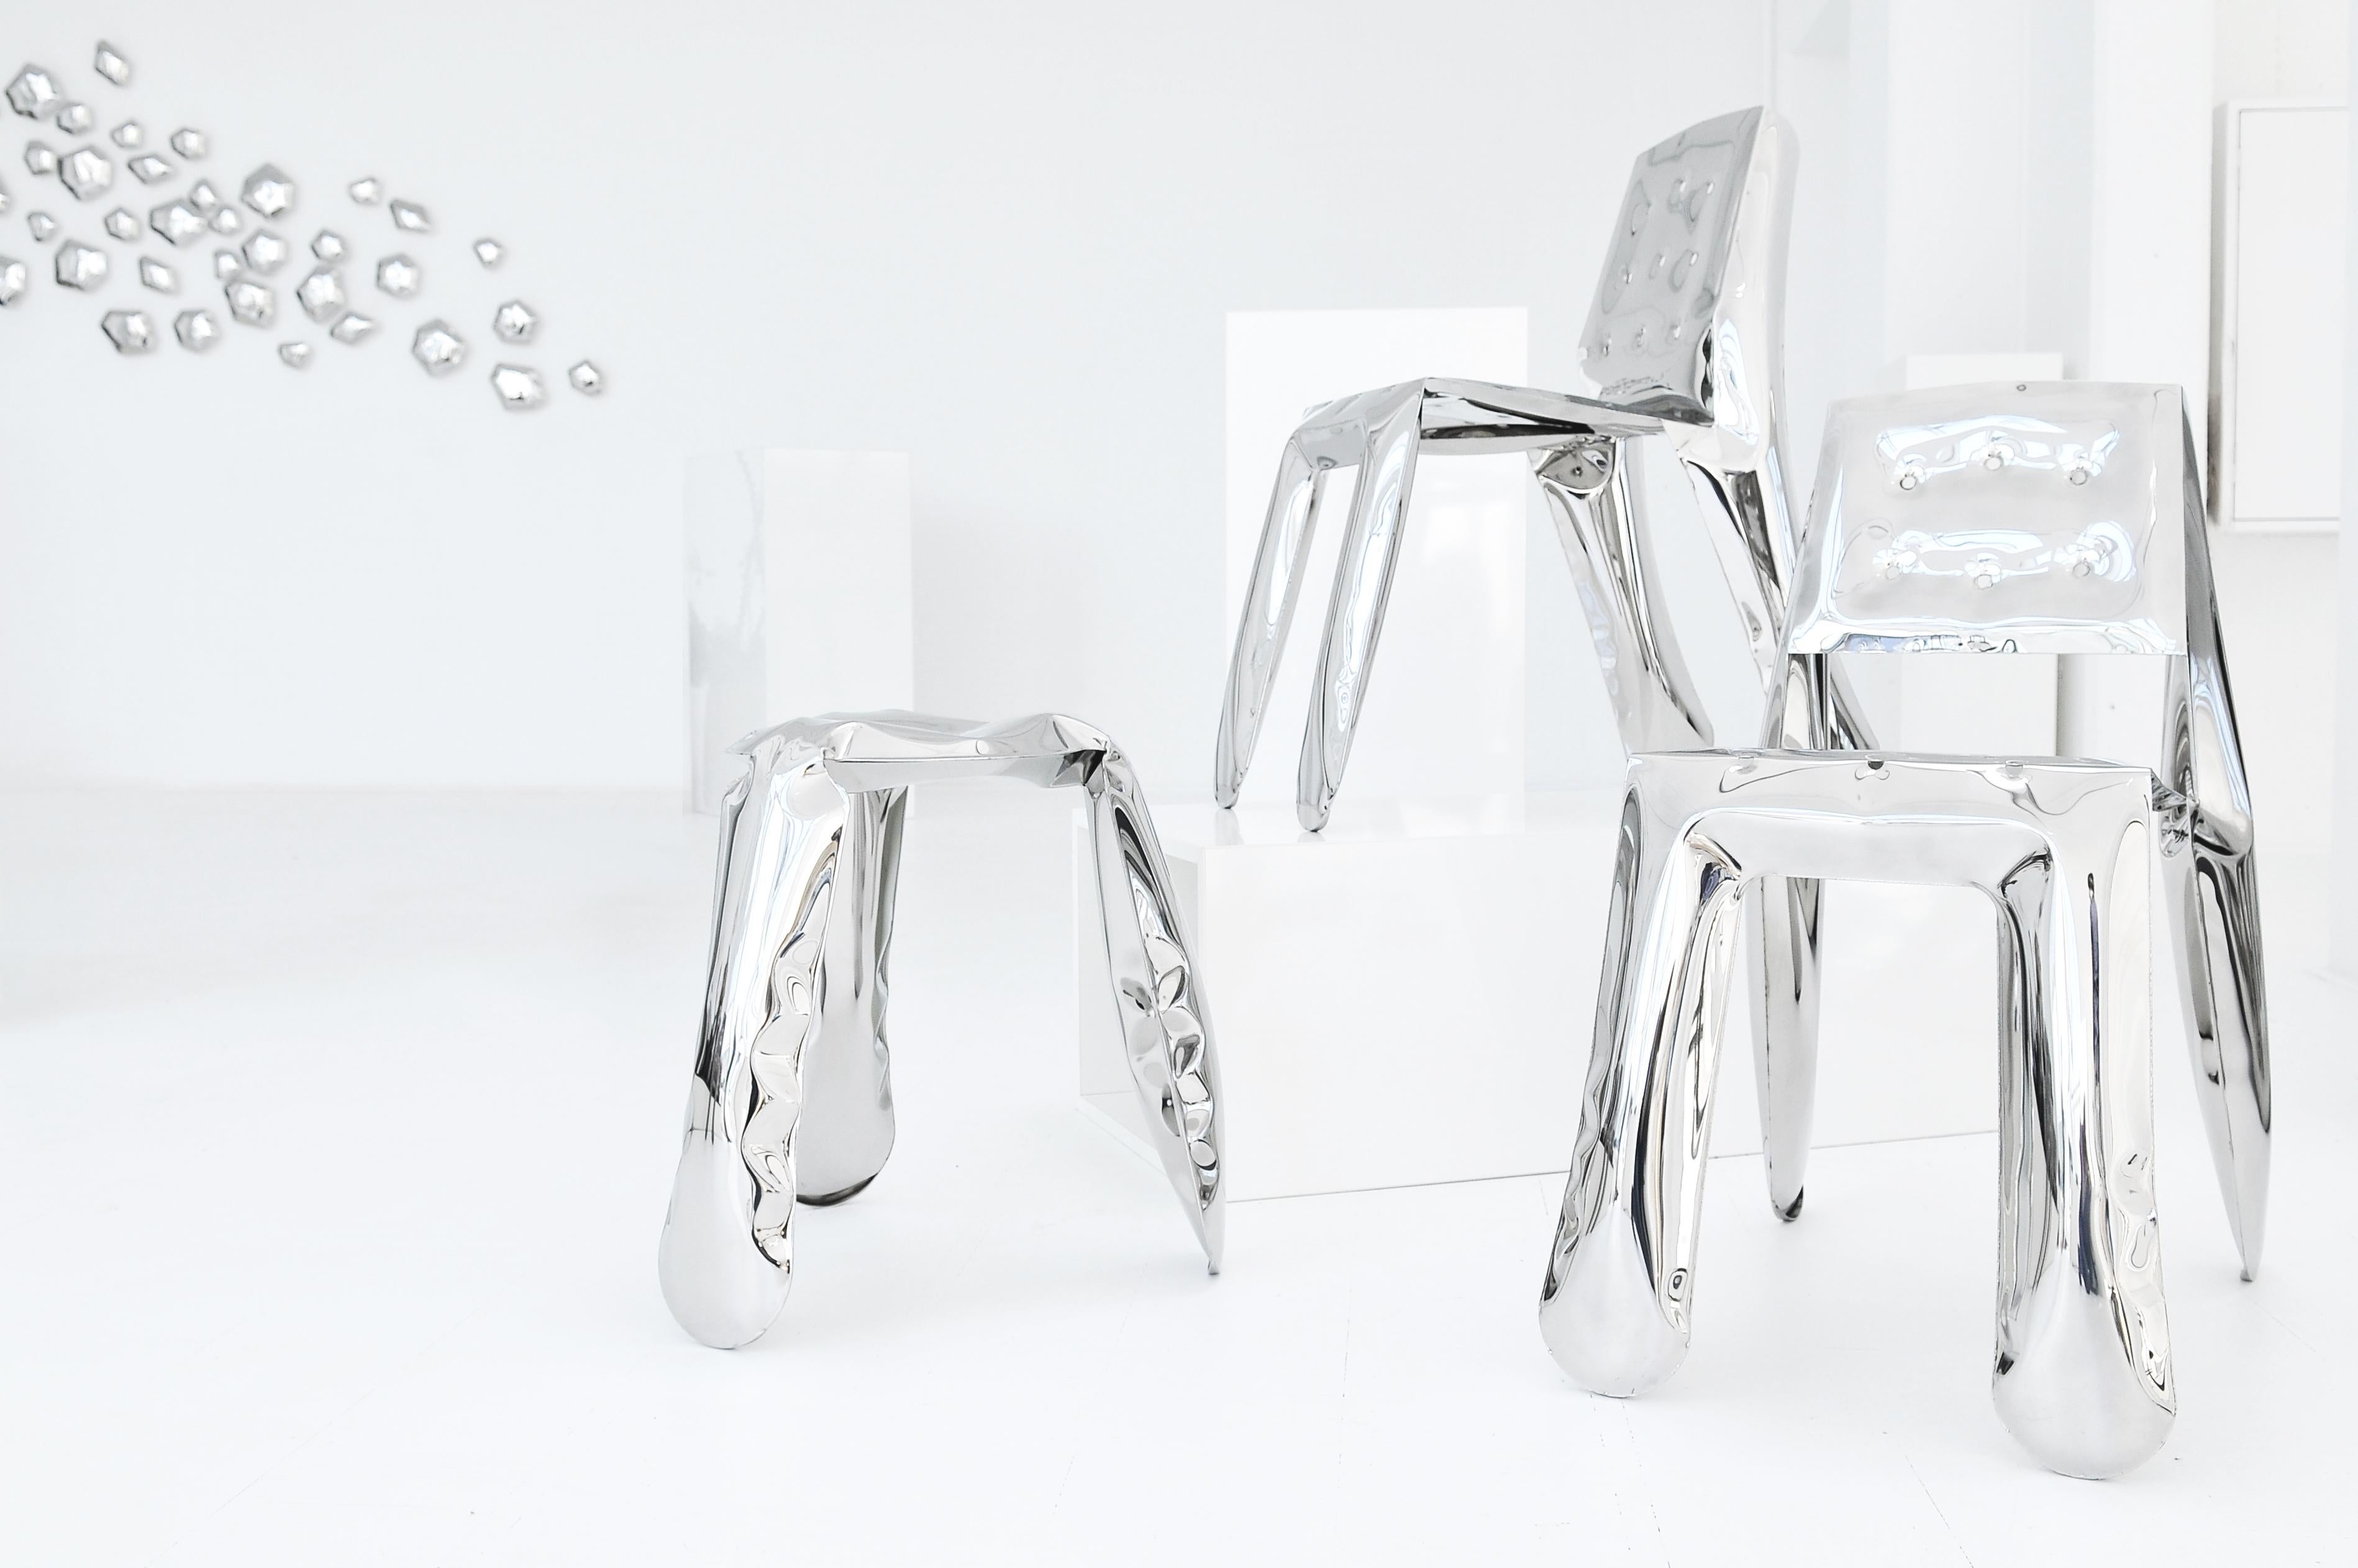 Stainless Steel Chippensteel 0.5 Sculptural Chair by Zieta 1